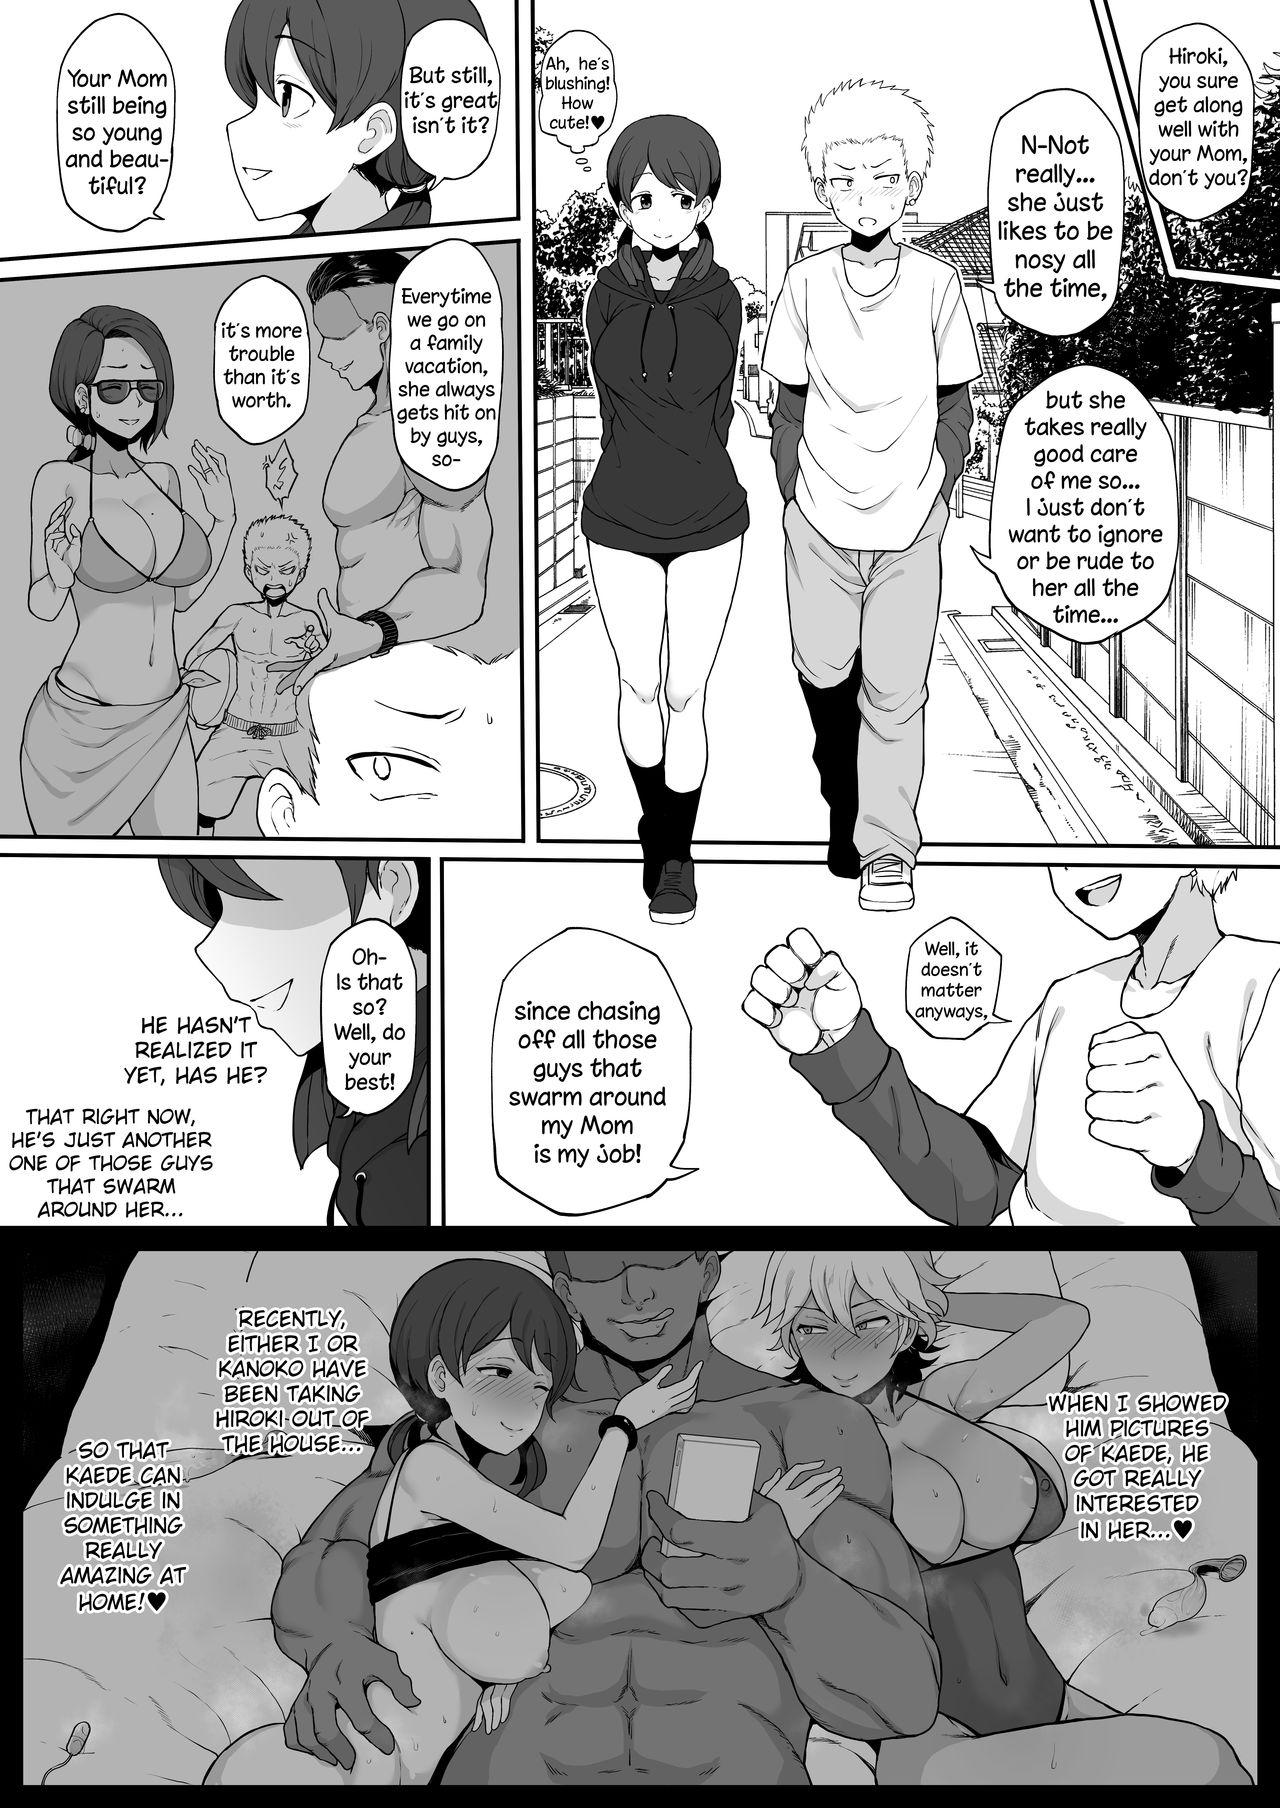 Kokujin no Tenkousei NTR ru Chapters 1-6 part 1 Plus Bonus chapter: Stolen Mother’s Breasts 12